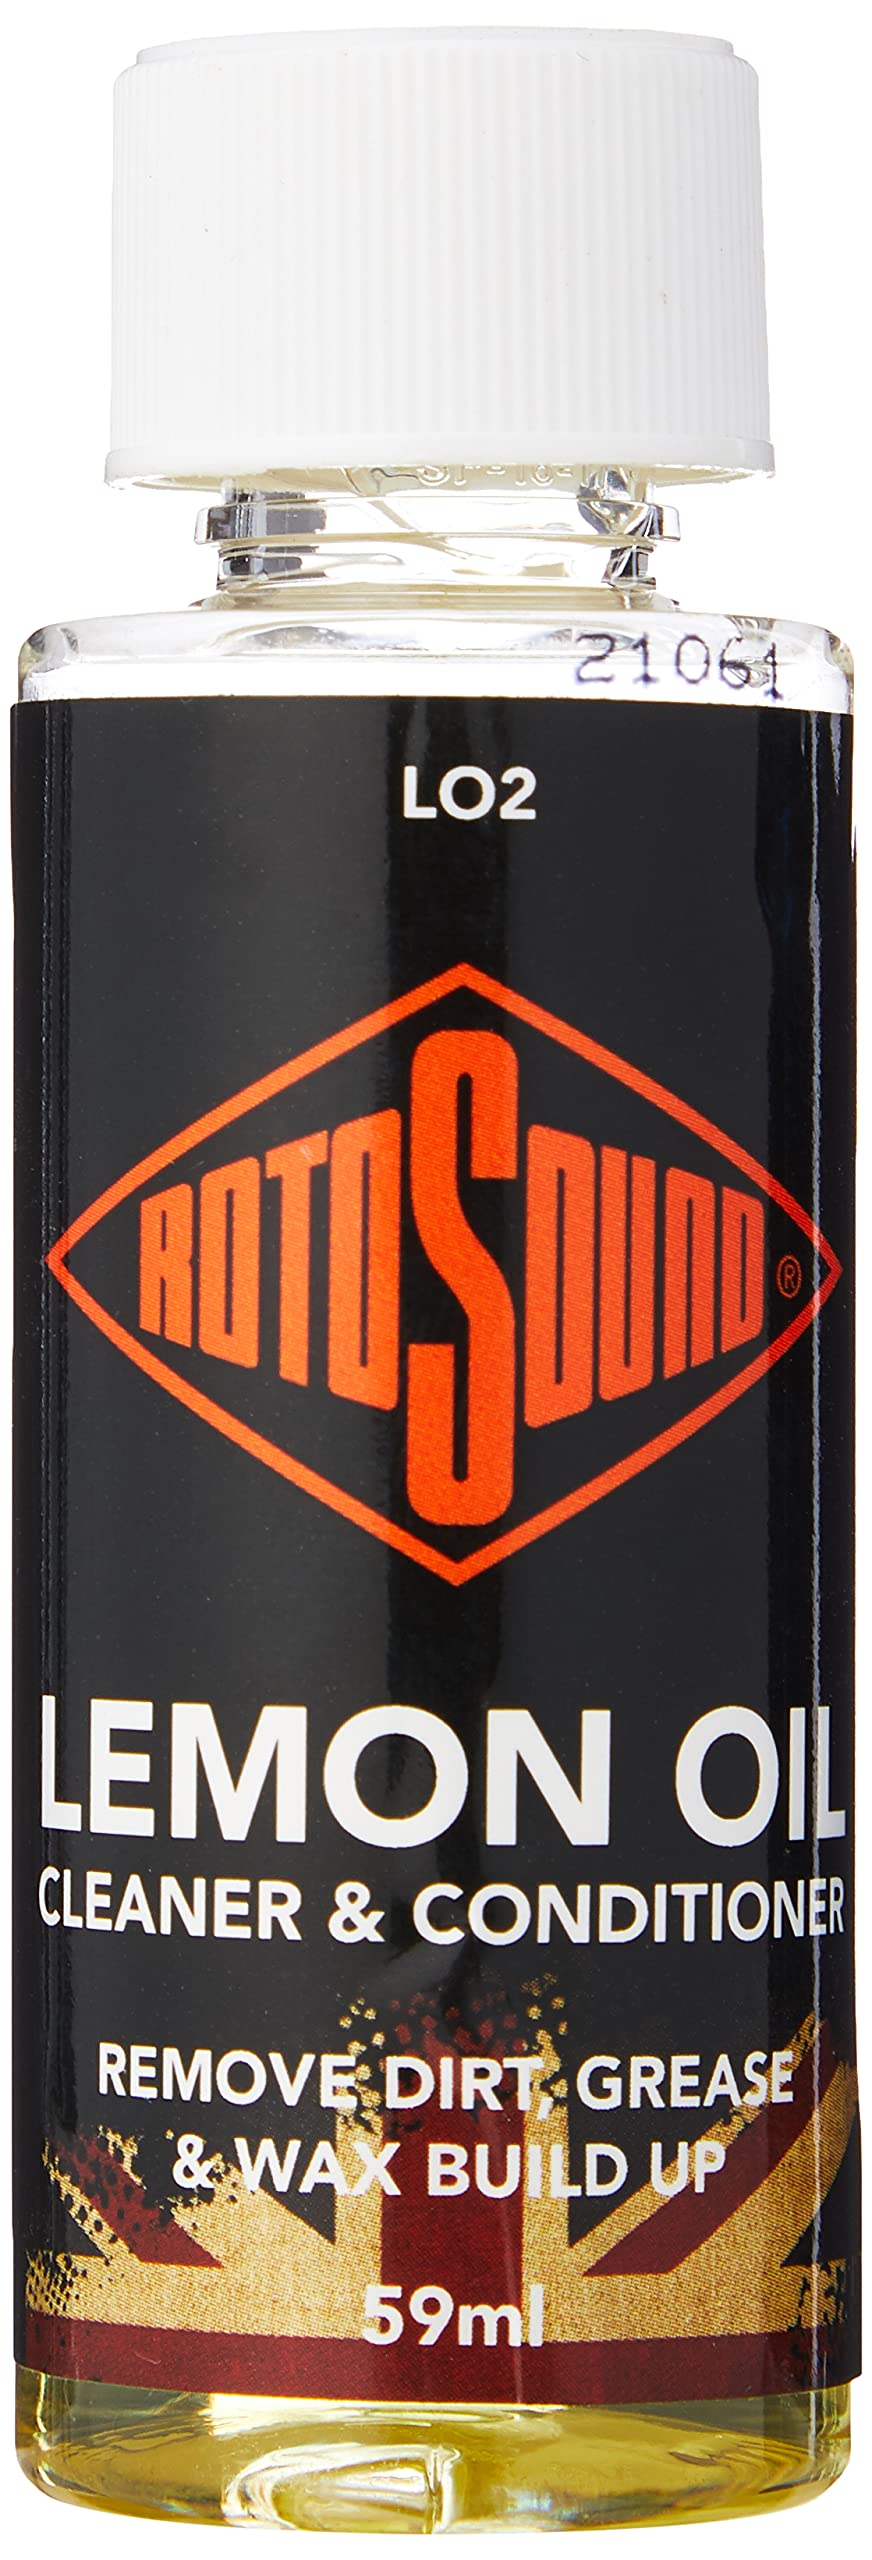 Rotosound LO2 Guitar Care Lemon Oil Single